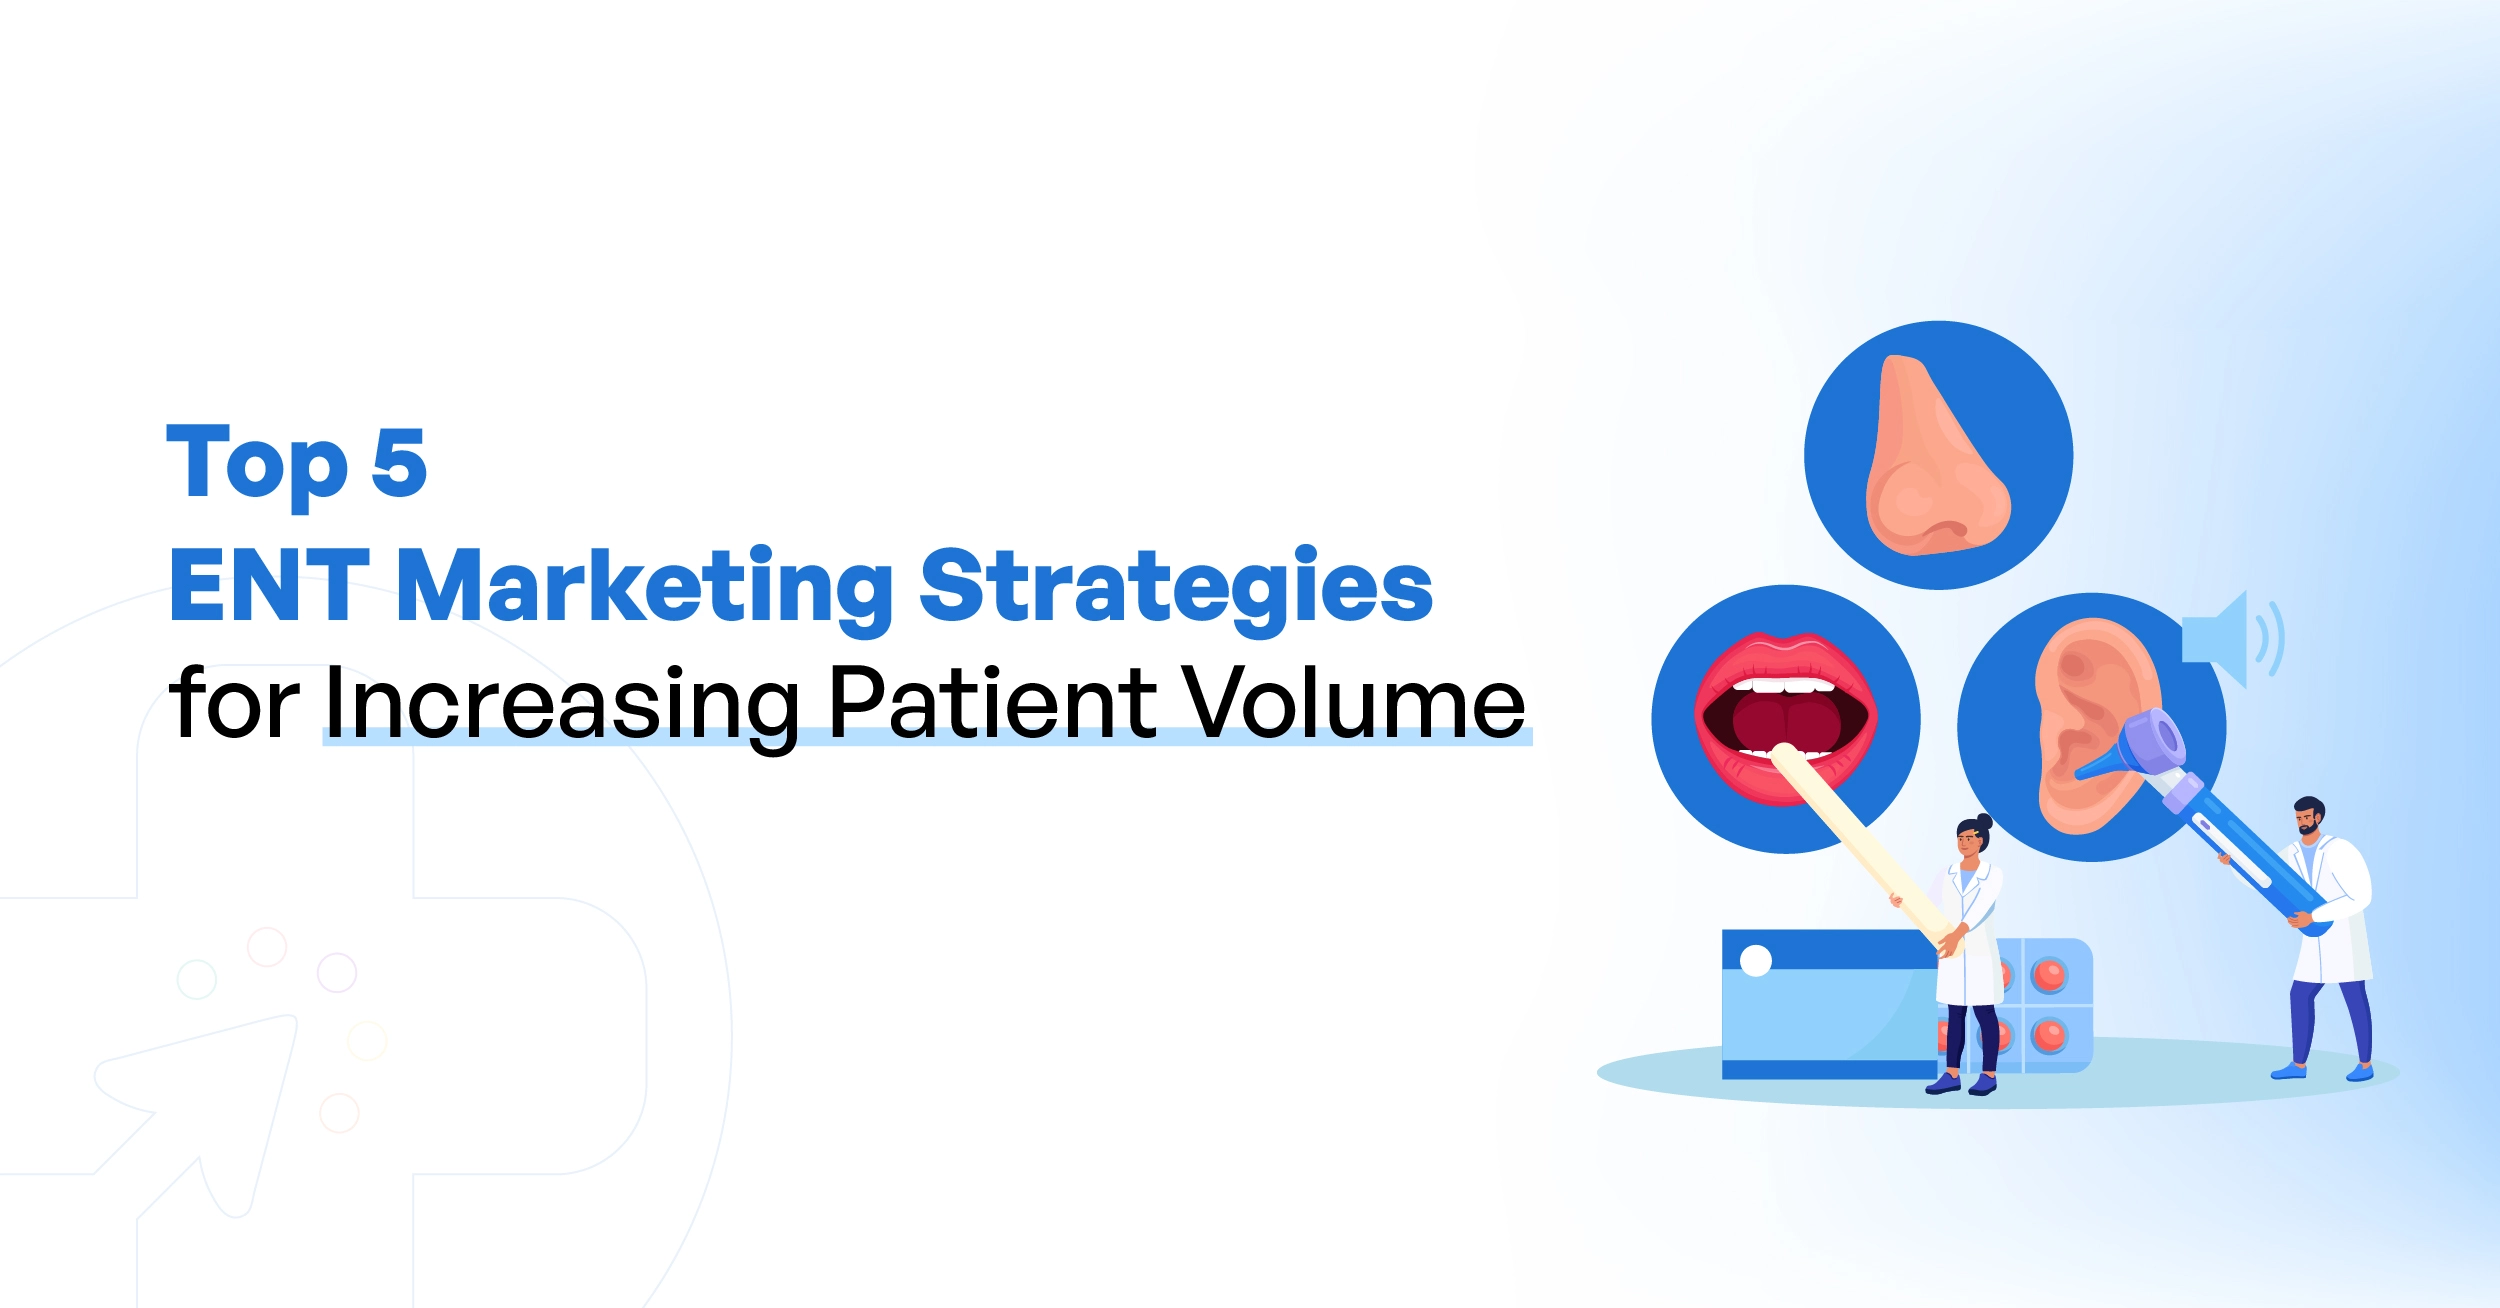 Top 5 ENT Marketing Strategies for Increasing Patient Volume